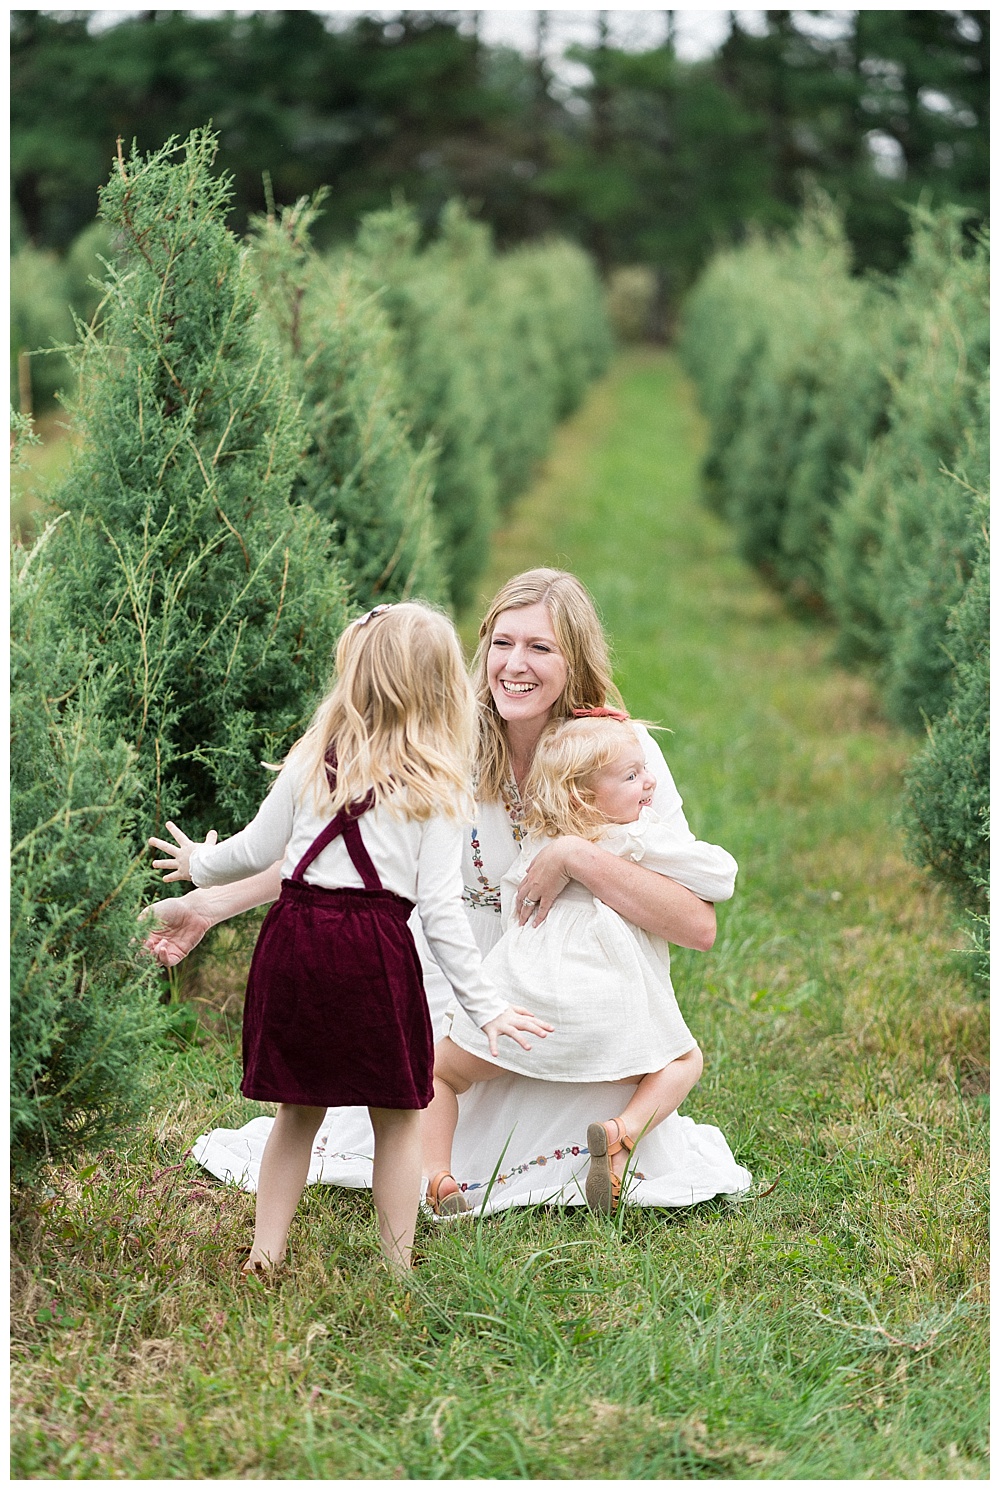 Christmas Tree Farm Photo session in Nashville TN by Family Photographer Grace Paul.